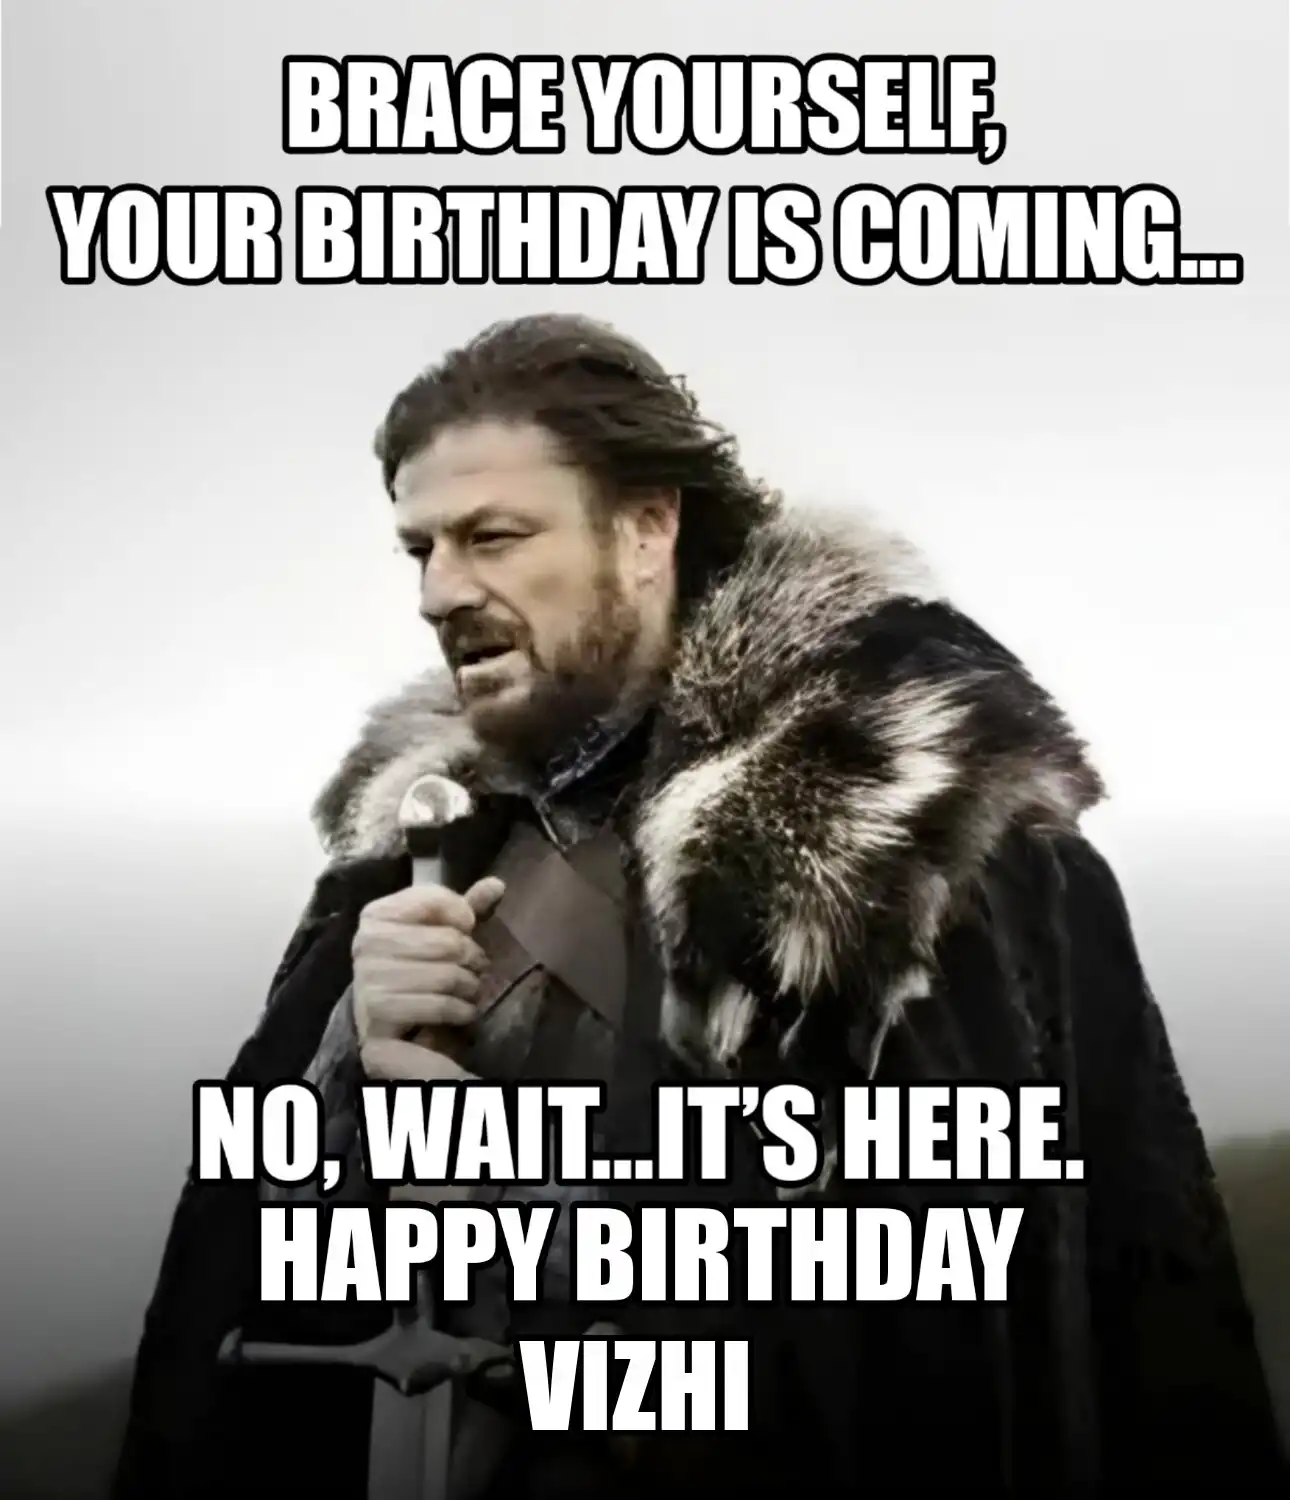 Happy Birthday Vizhi Brace Yourself Your Birthday Is Coming Meme